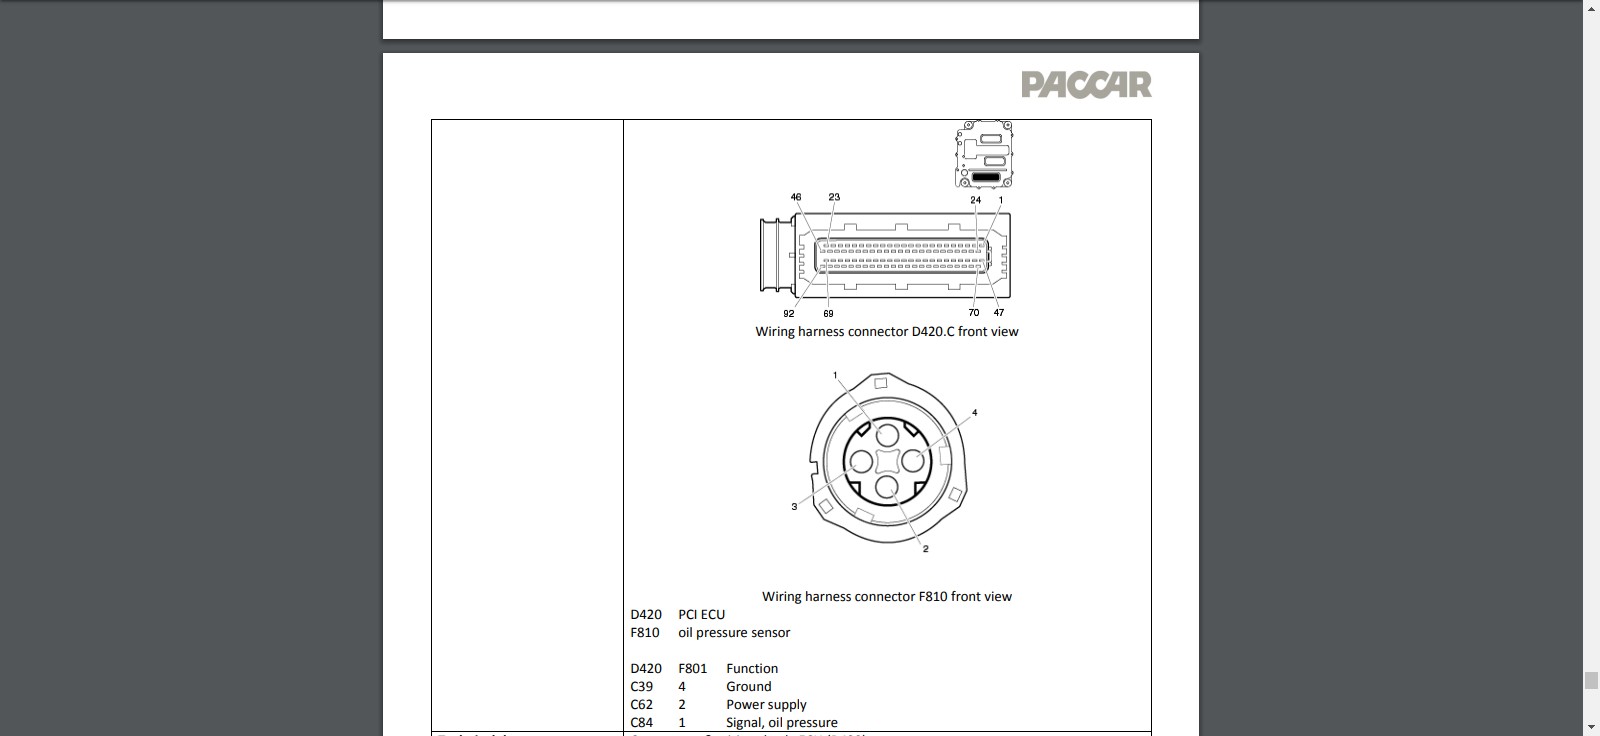 Paccar Mx 13 Wiring Diagram for Engine Brake Paccar Mx Wiring Diagram Wiring Diagram Of Paccar Mx 13 Wiring Diagram for Engine Brake